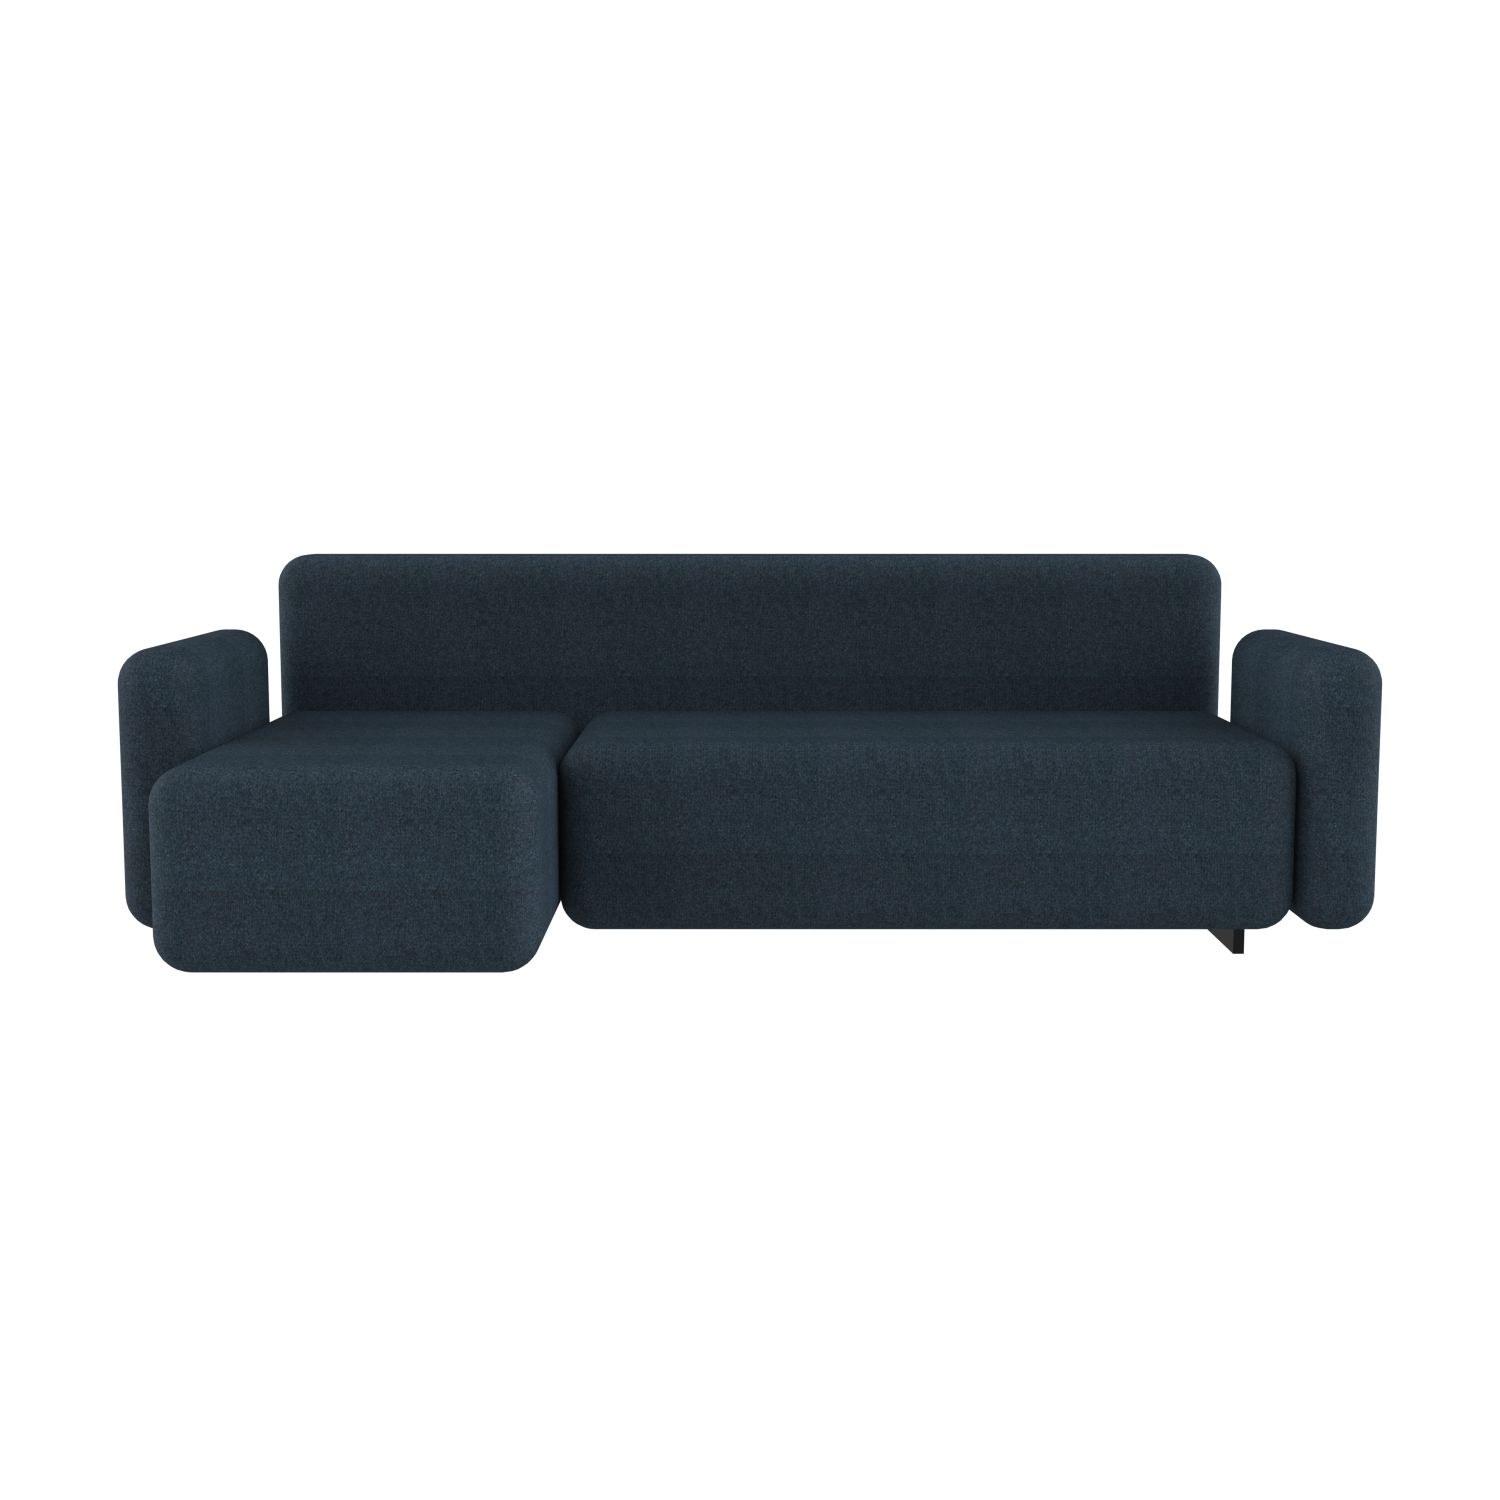 lensvelt fabio novembre balance lounger left with armrest moss night blue 45 black ral9005